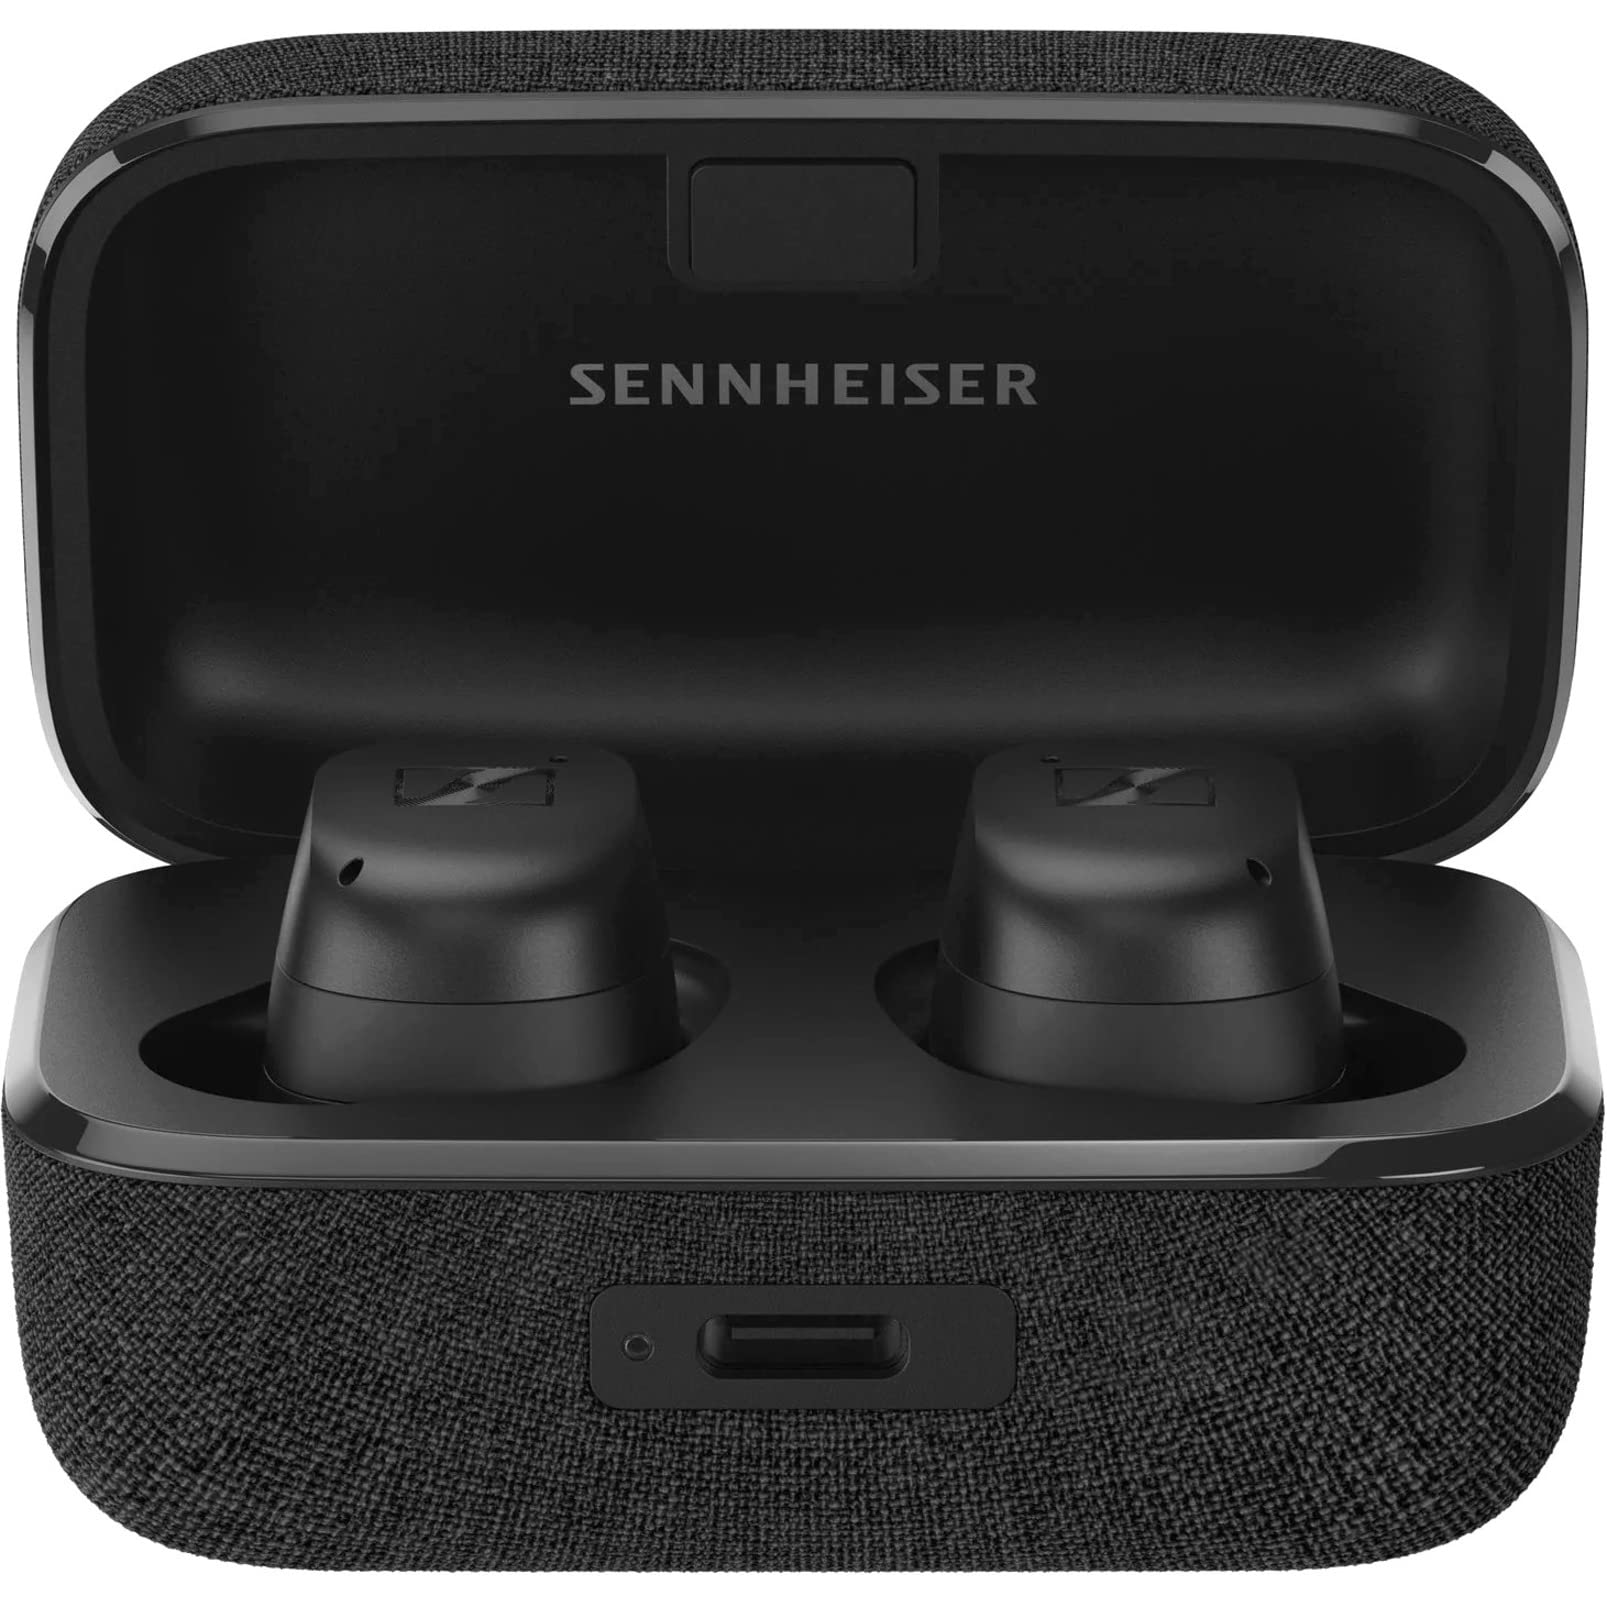 Sennheiser Consumer Audio सेन्हाइज़र मोमेंटम ट्रू वायरल...